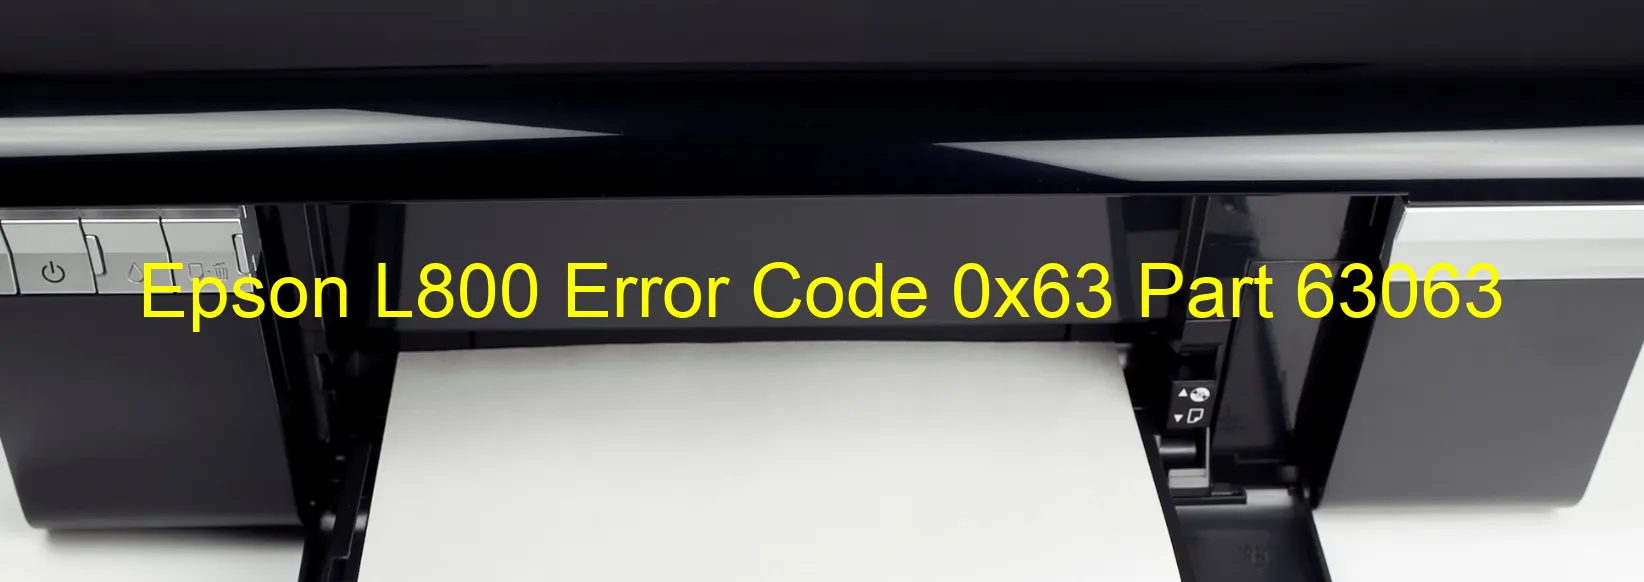 Epson L800 Error Code 0x63 Part 63063